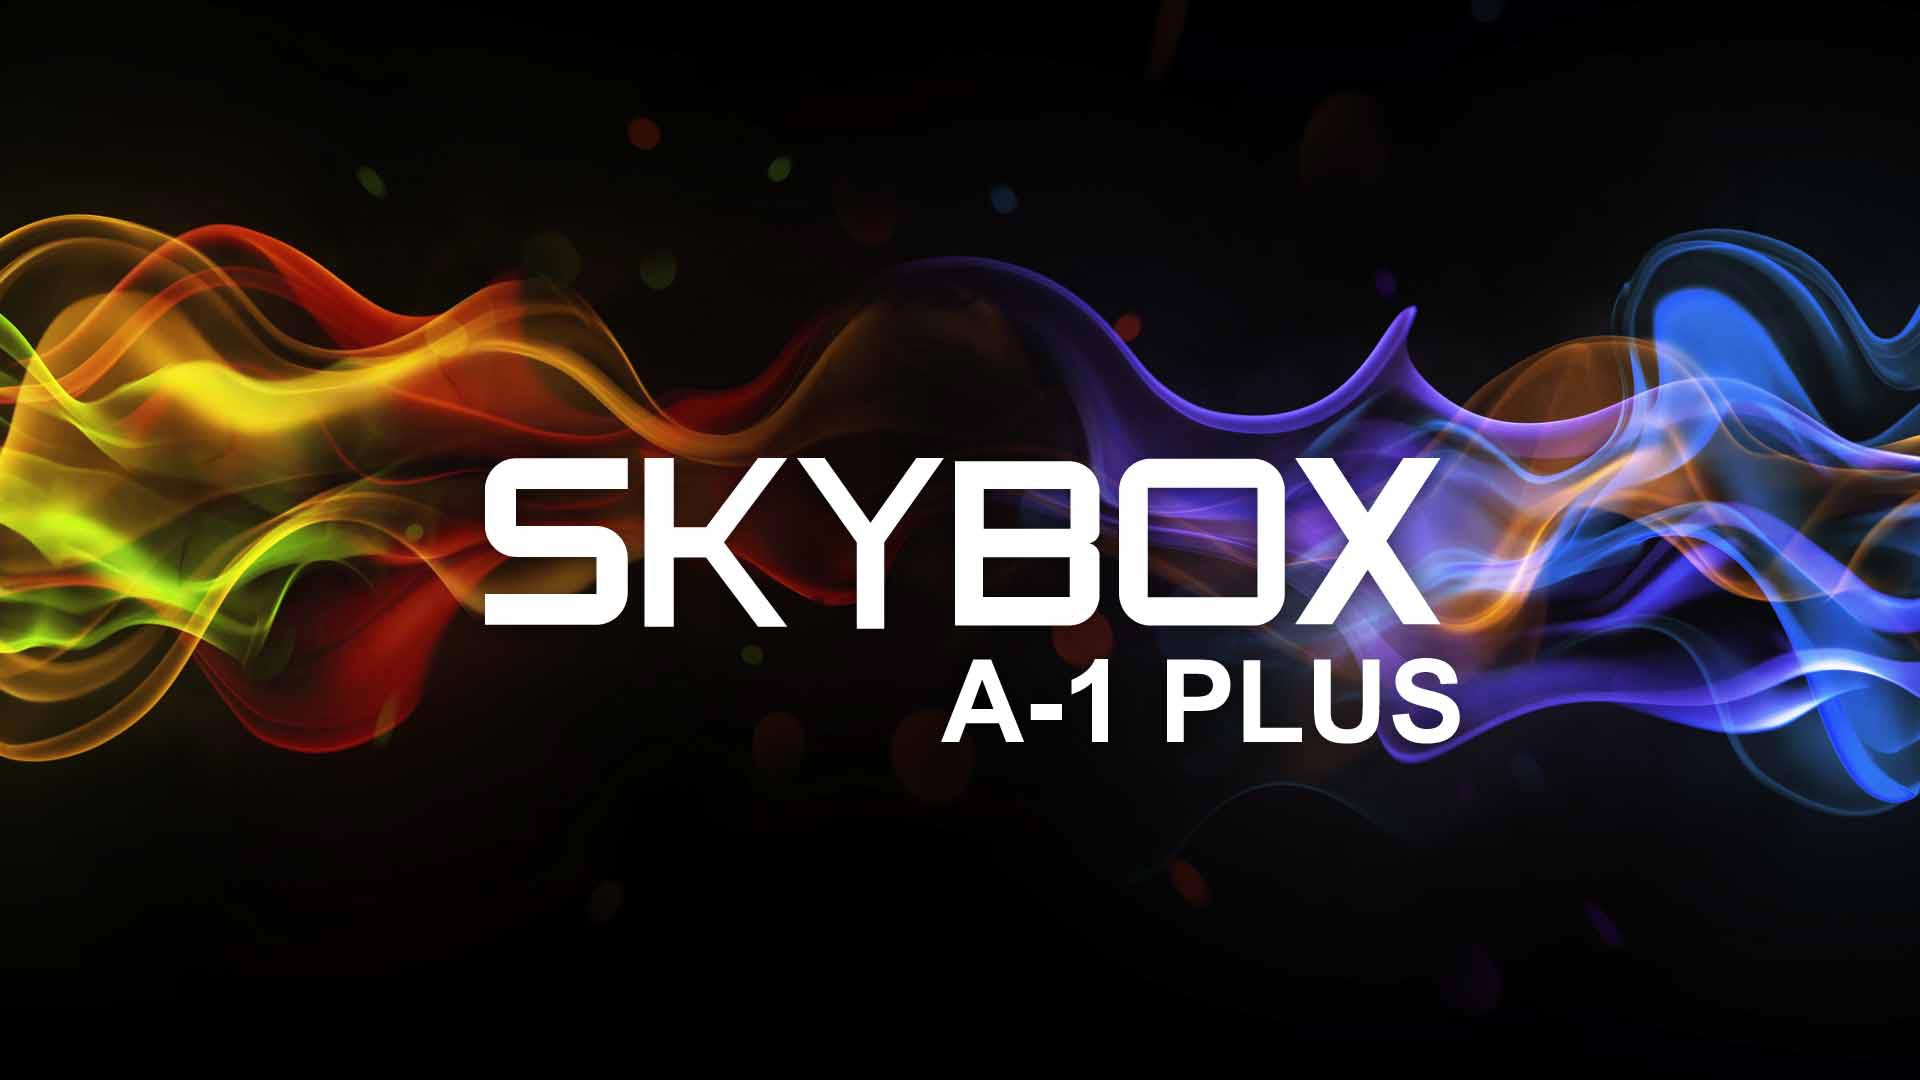 Cara Mengganti Boot Logo Skybox A1 Plus memakai Foto Sendiri